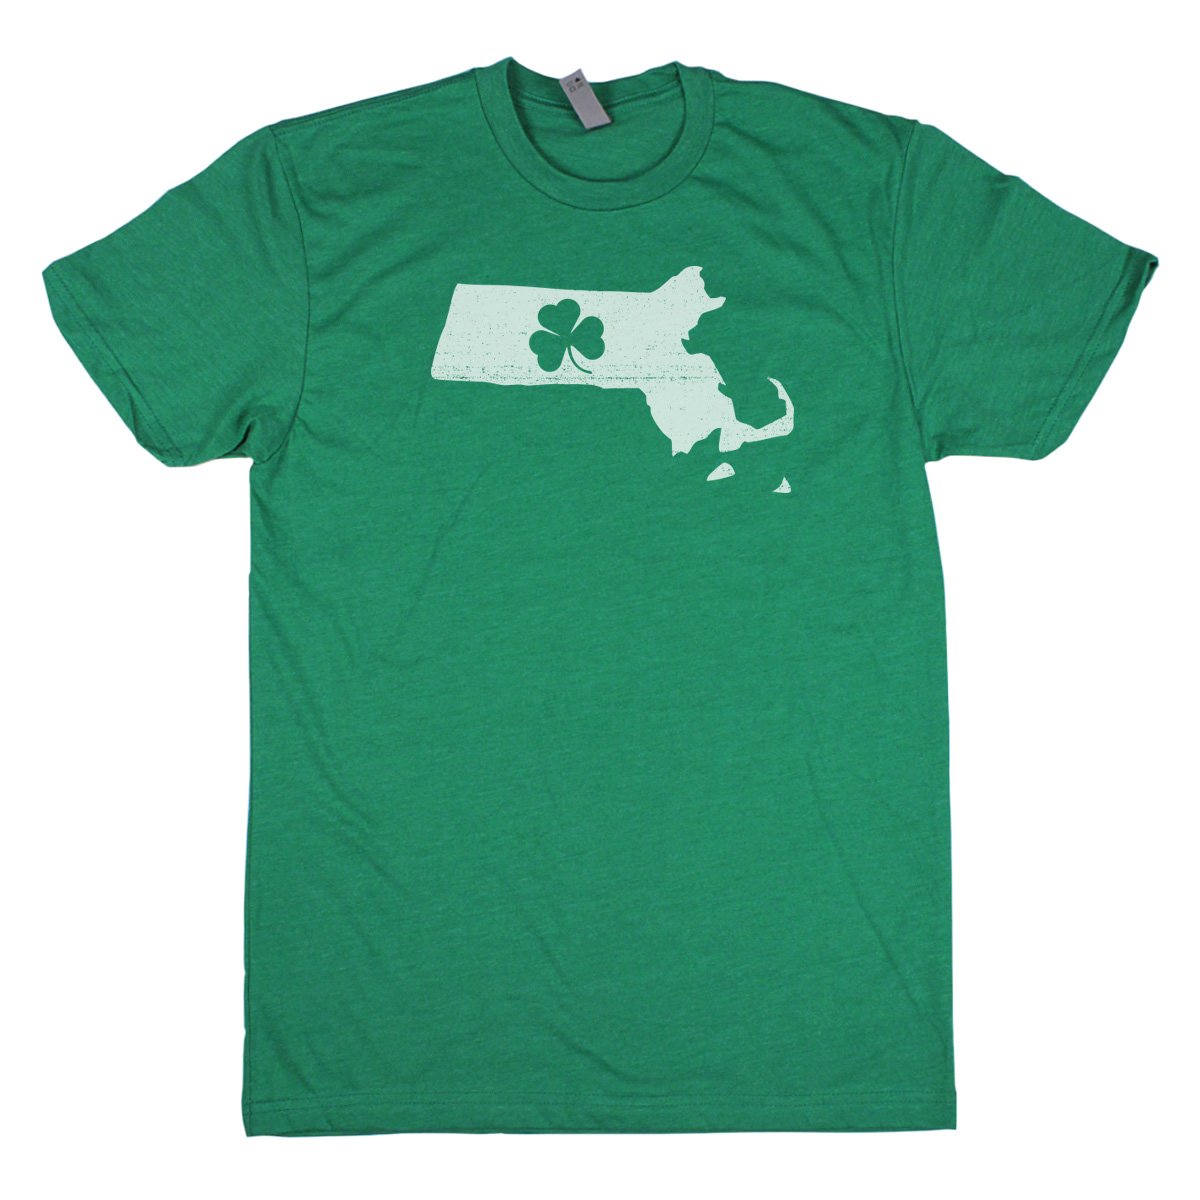 Shamrock Men's Unisex T-Shirt - Louisiana